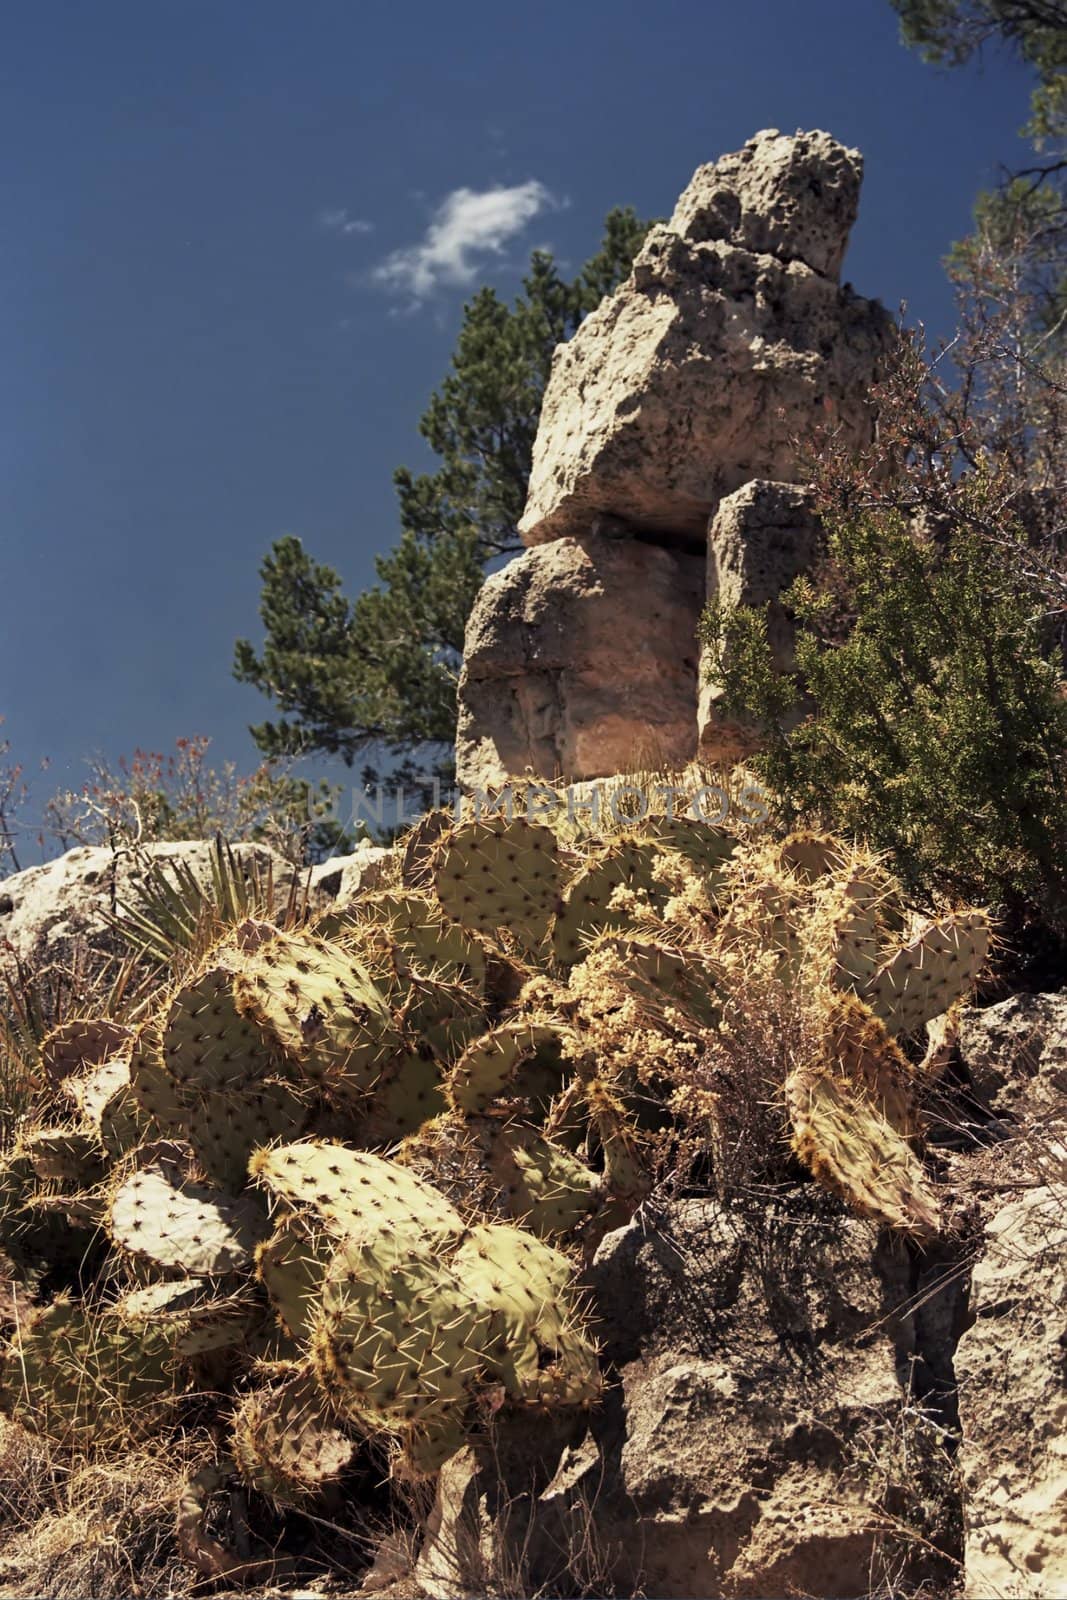 Wild cacti on hill in American southwest desert